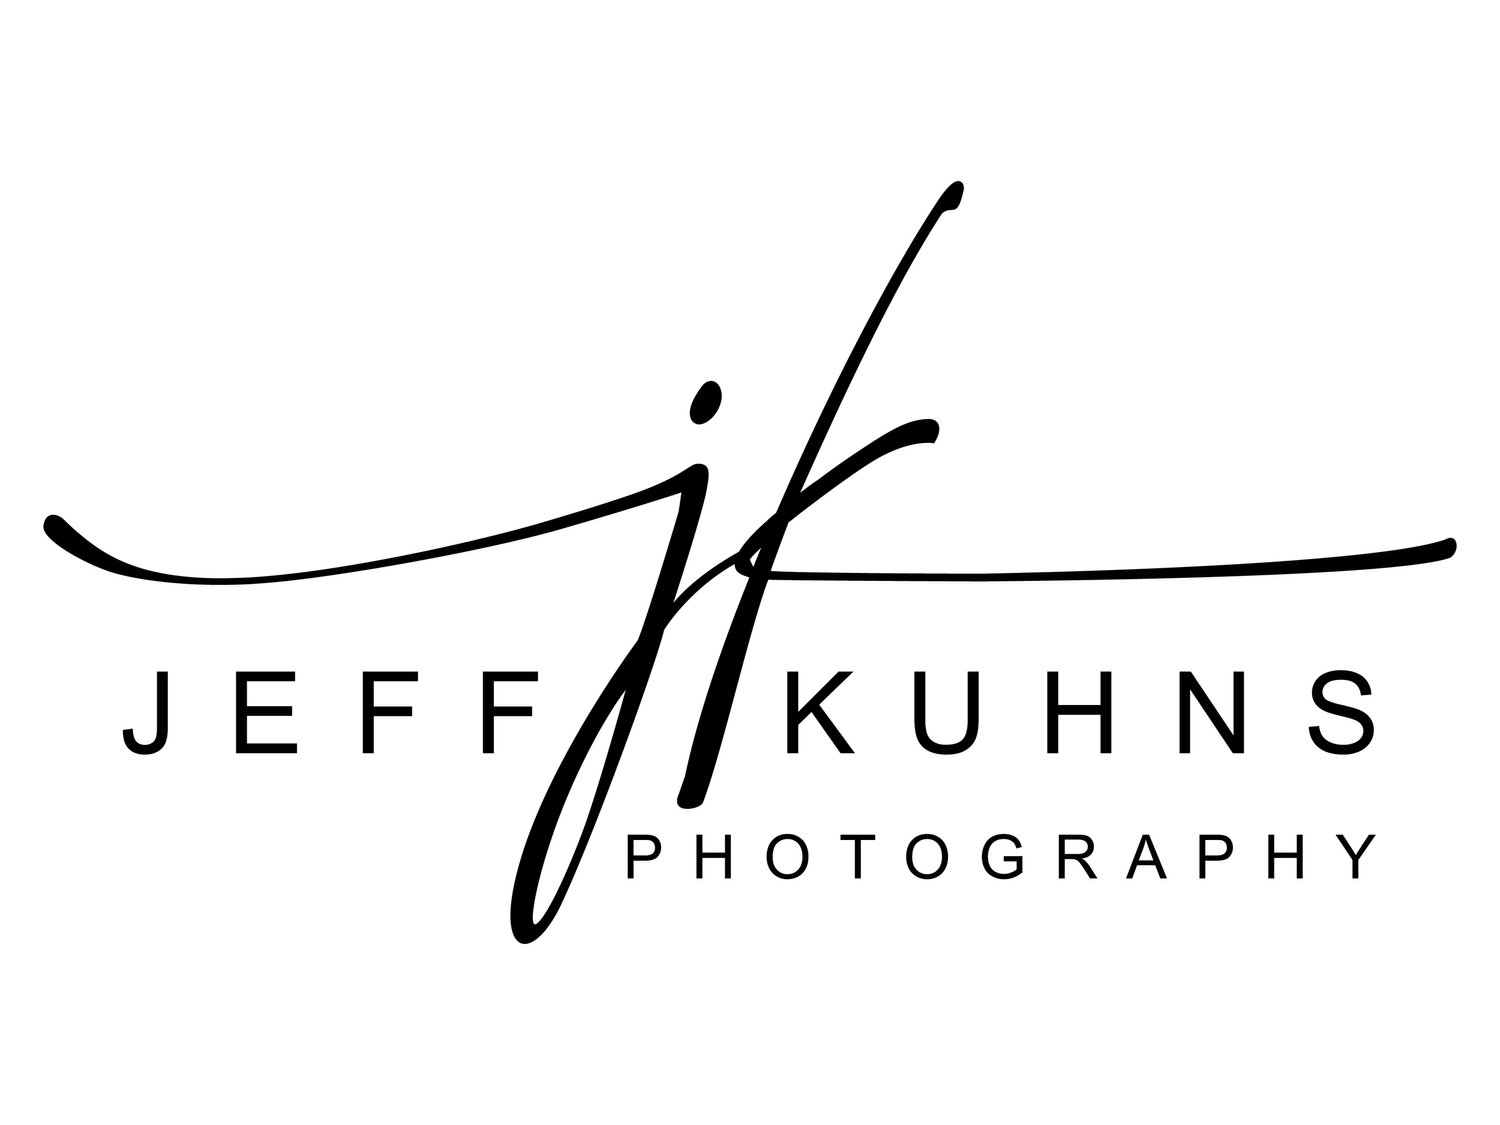 Jeff Kuhns Photography